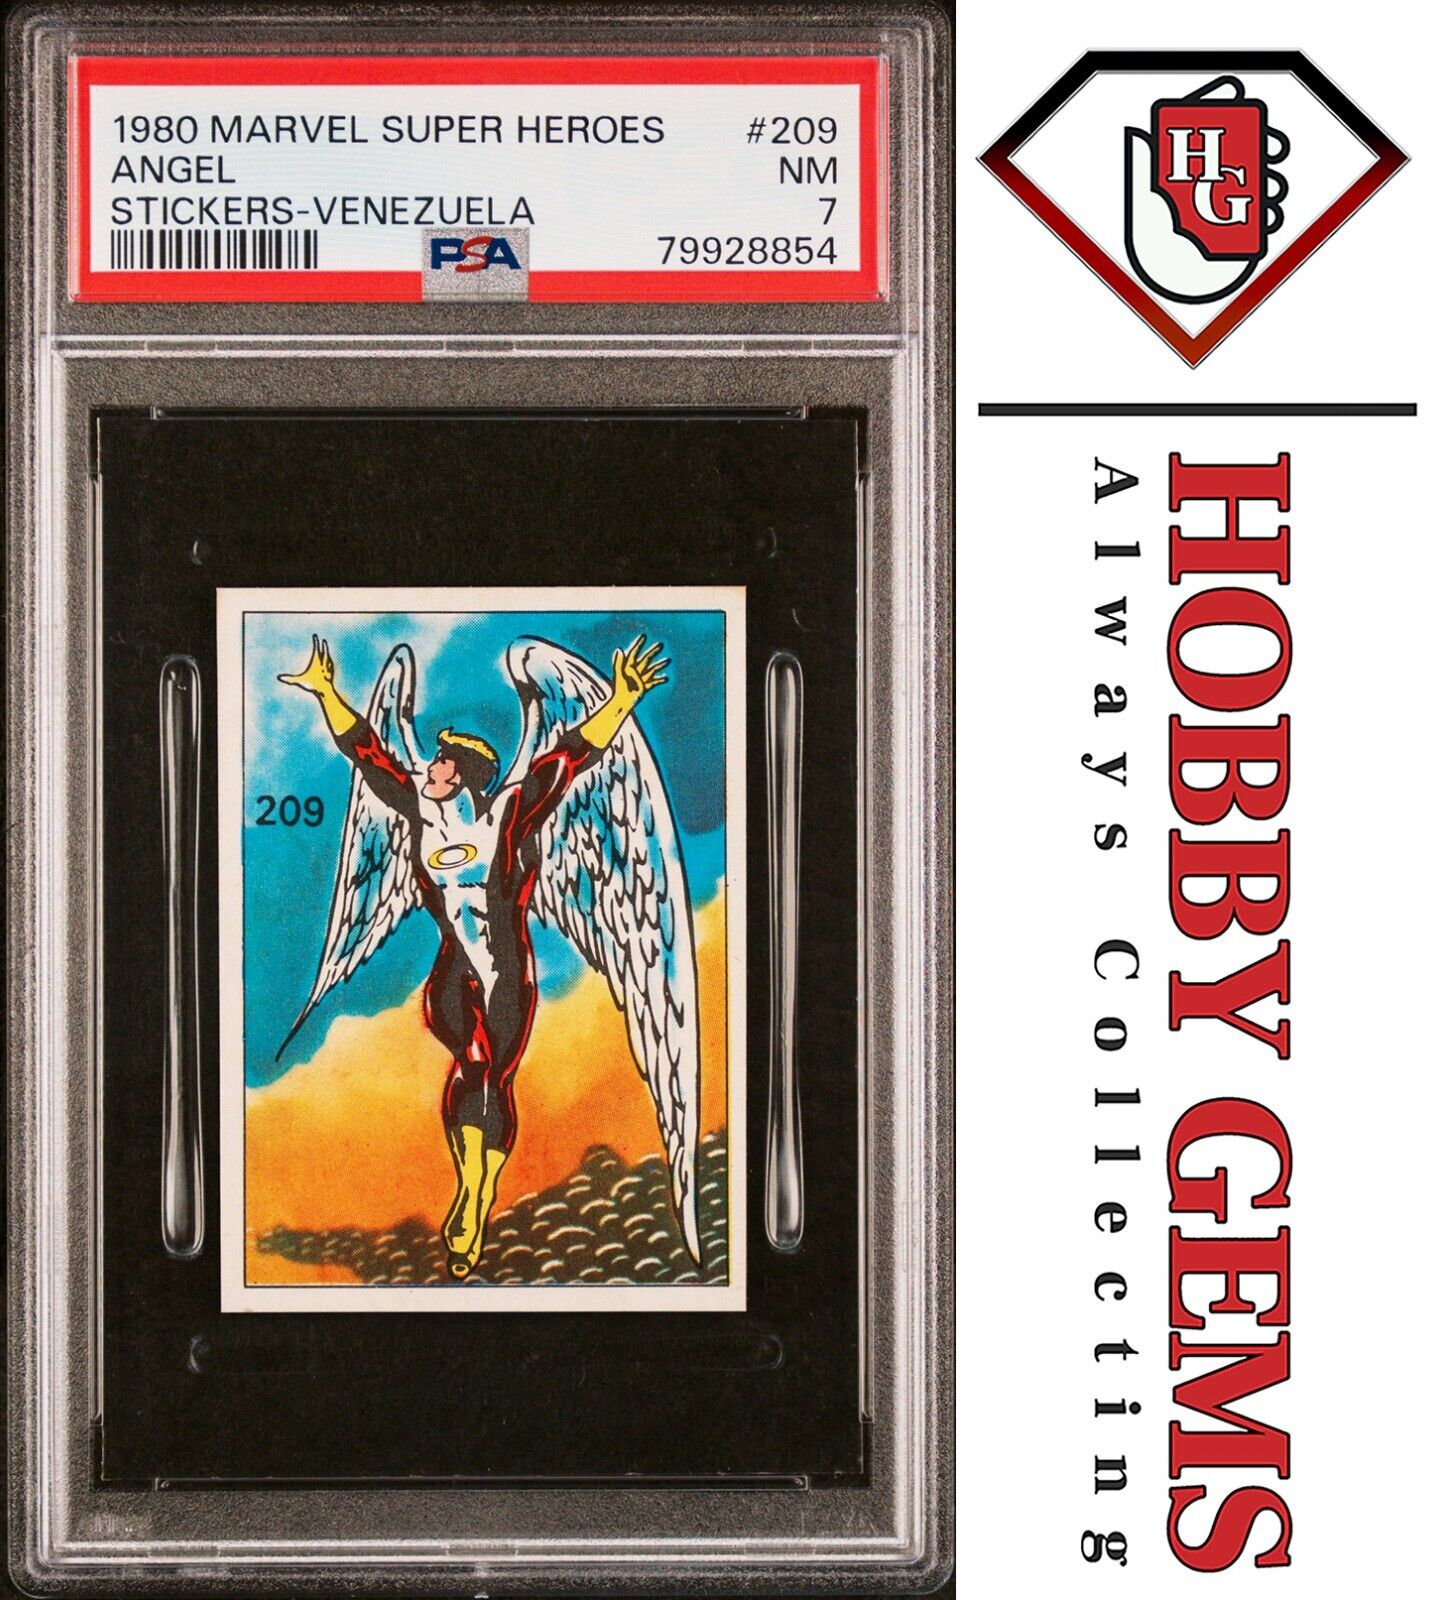 ANGEL PSA 7 1980 Marvel Super Heroes Sticker Venezuela #209